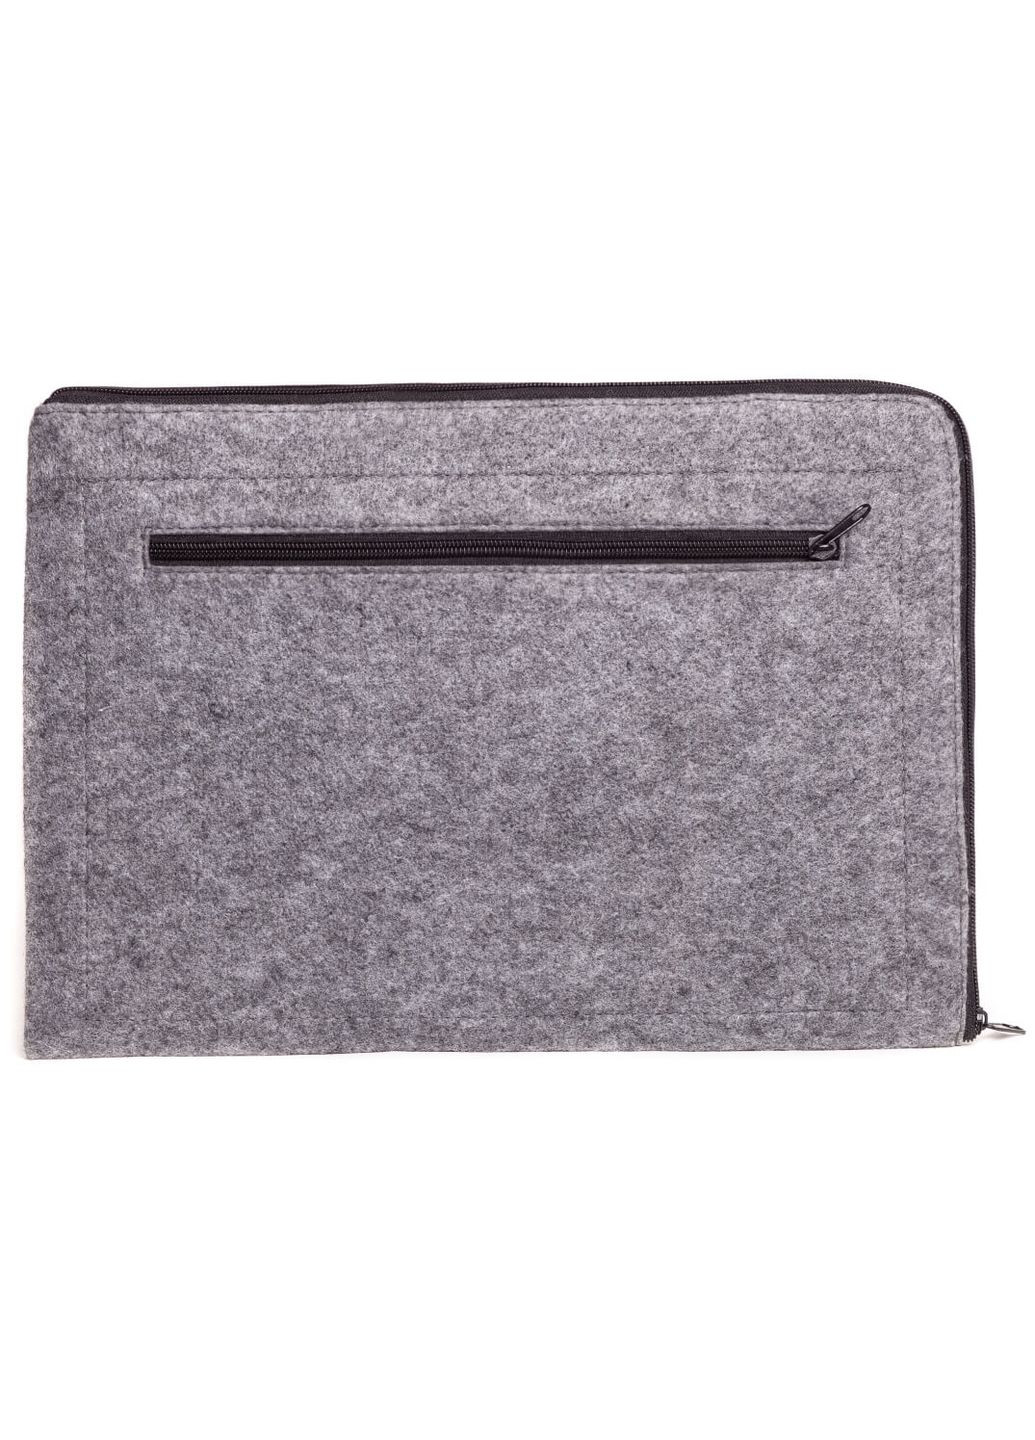 Чехол для ноутбука для Macbook Pro 13 Grey (GM67-13New) Gmakin (260339307)